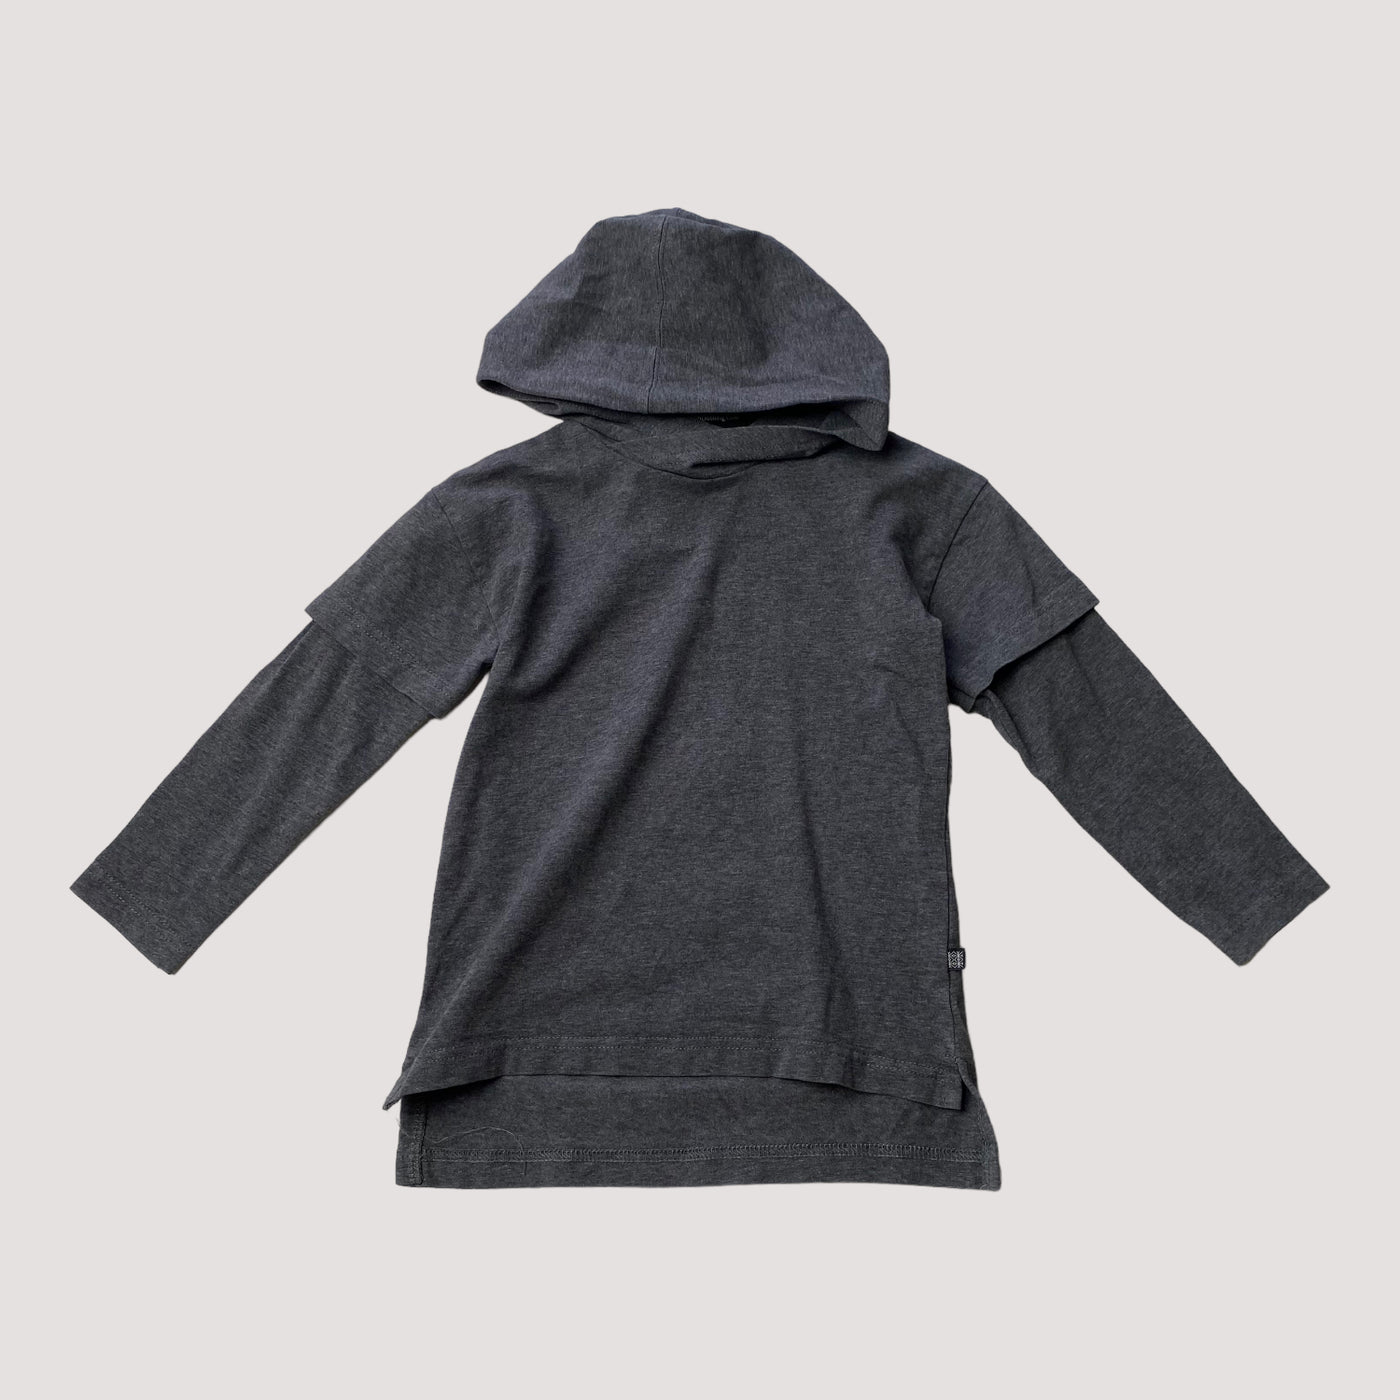 Kaiko hooded shirt, grey | 86/92cm